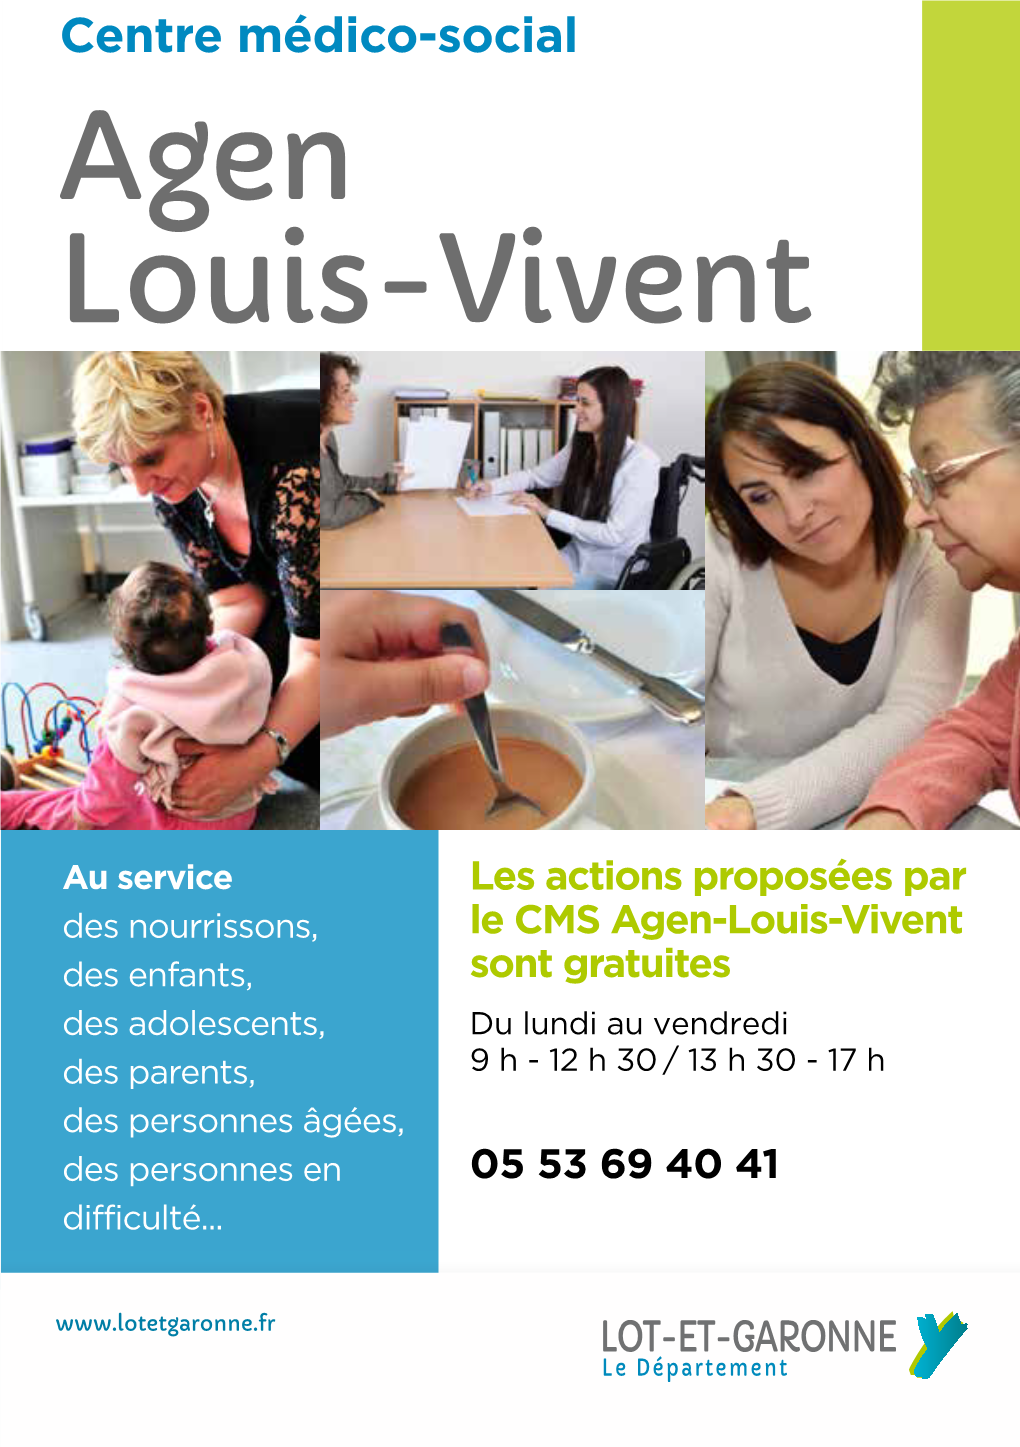 Centre Médico-Social Agen Louis-Vivent